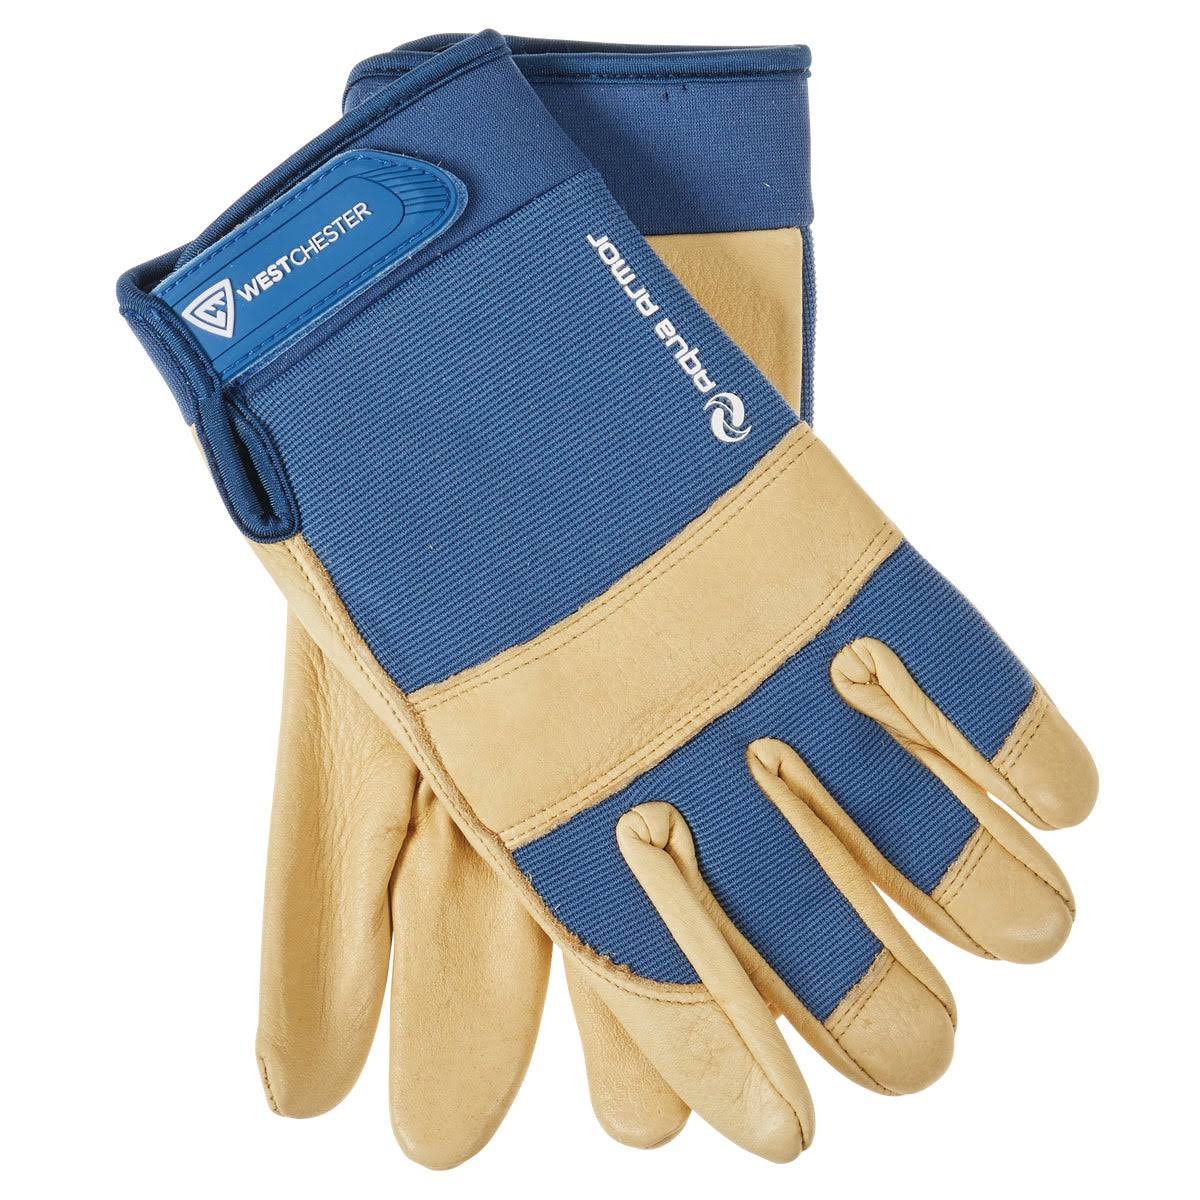 Boss Job Master Aqua Armor Men's XL Blue & Tan Leather Work Glove